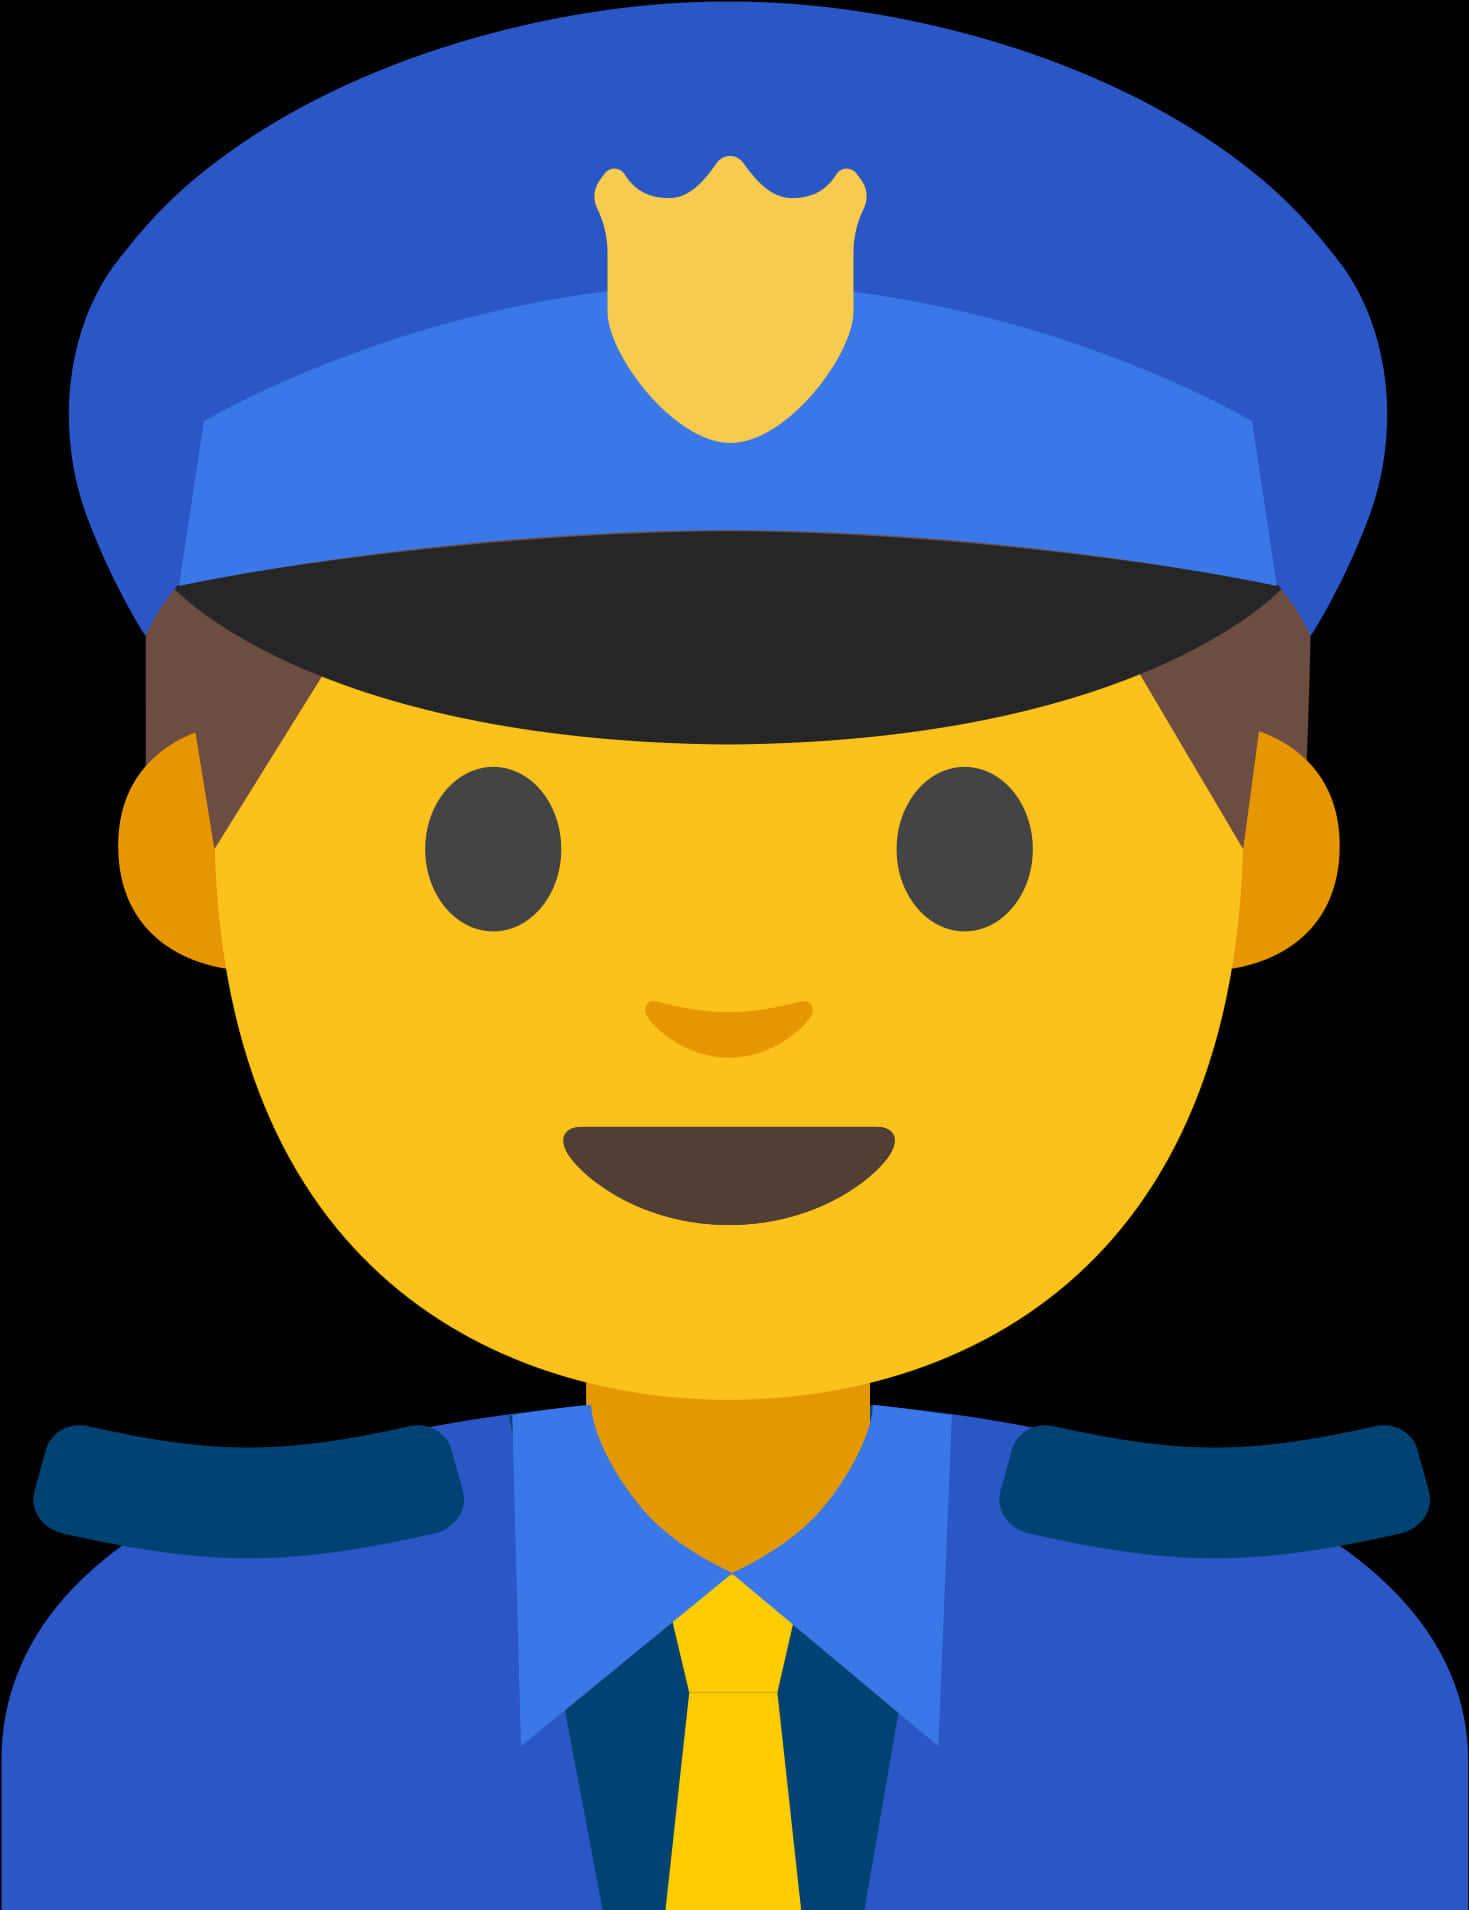 A Cartoon Of A Man In A Blue Uniform